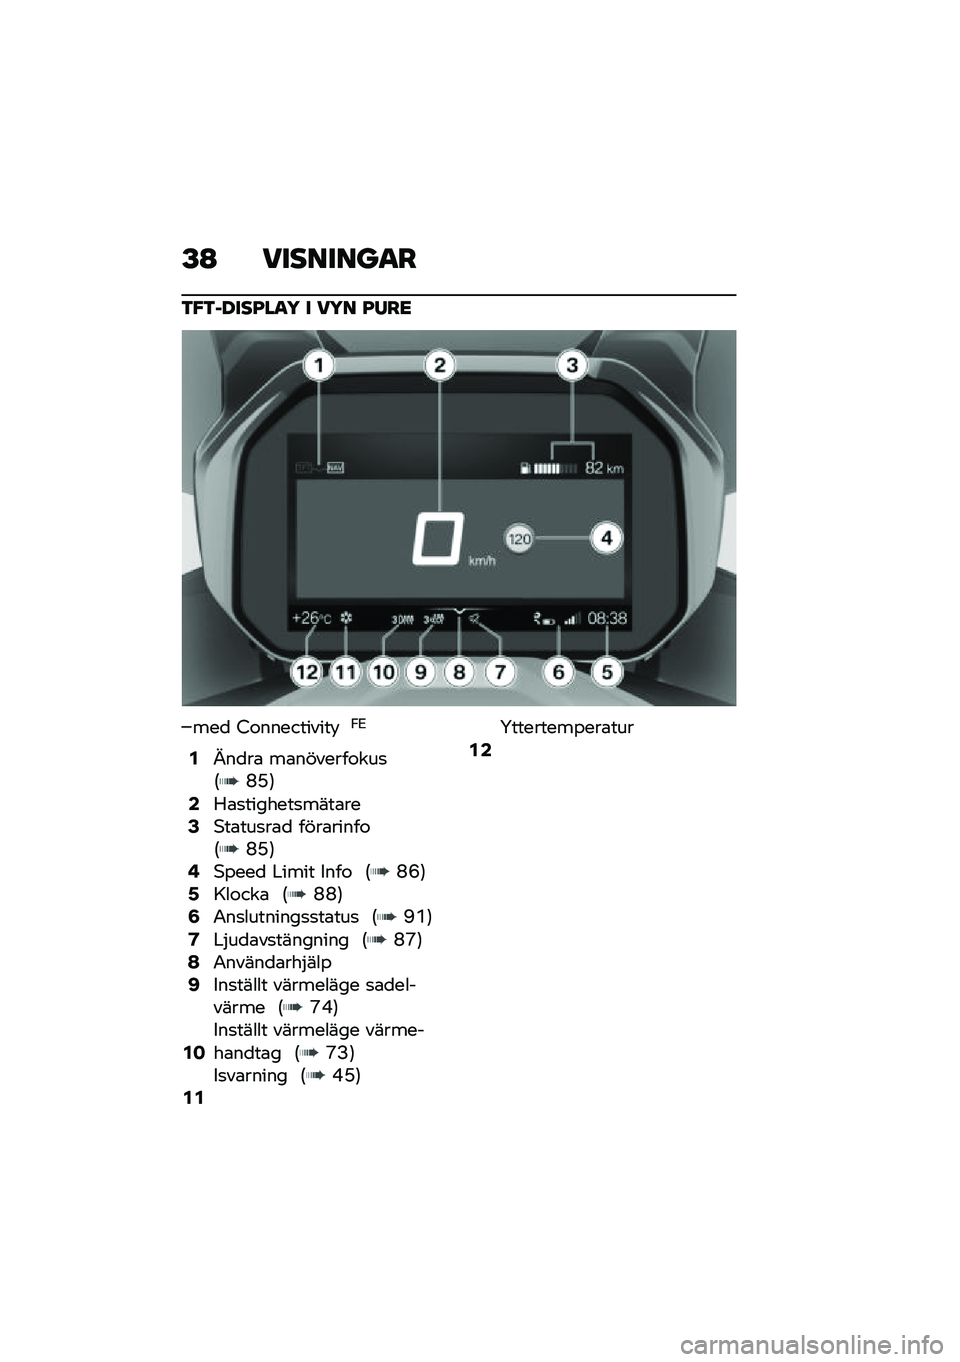 BMW MOTORRAD C 400 GT 2020  Instruktionsbok (in Swedish) �F�B ��������
�
�3�"�3�,����I��
�5 � ��5� �I�/��<
���
 �8�\f����������!�0�6
�4�W��
��\b ��\b�������\f���
�:�J�H�;�6�5�\b�
�������
����\b���8�*��\b��